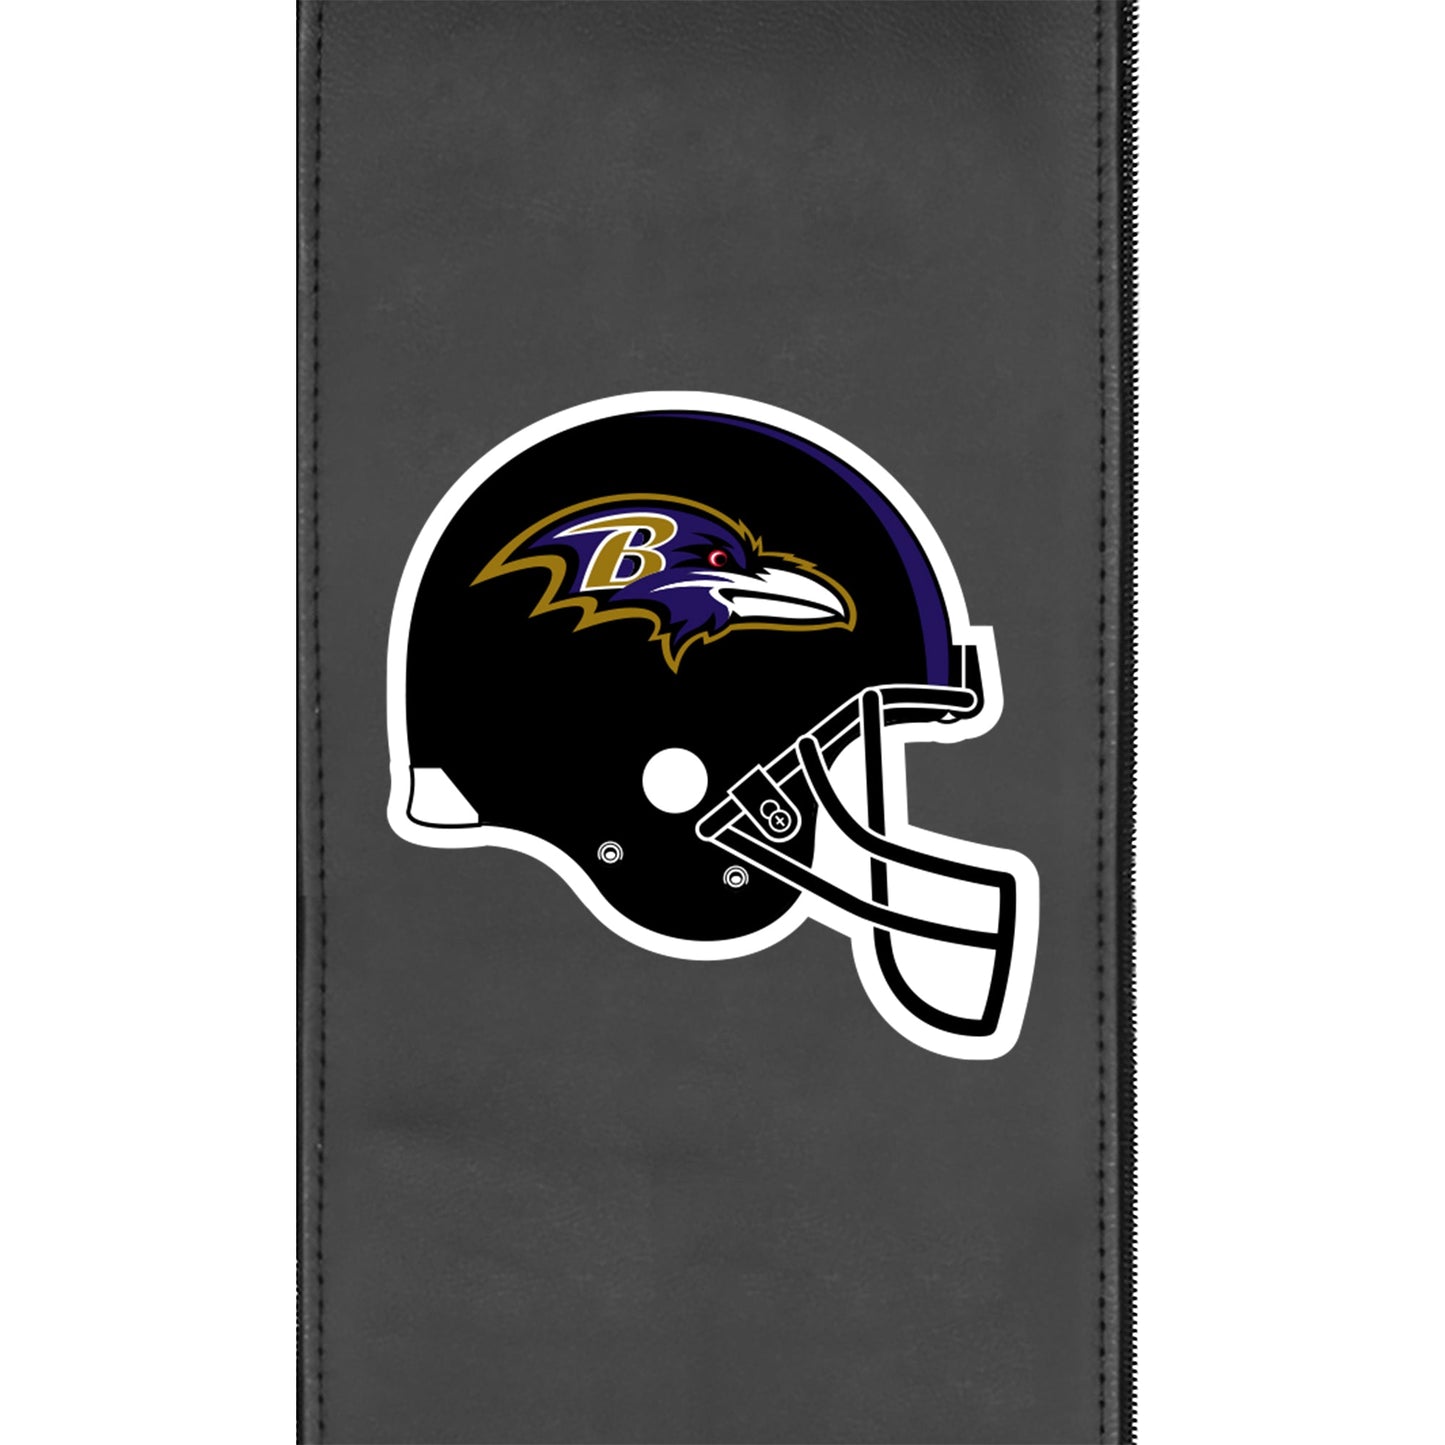 Curve Task Chair with Baltimore Ravens Helmet Logo